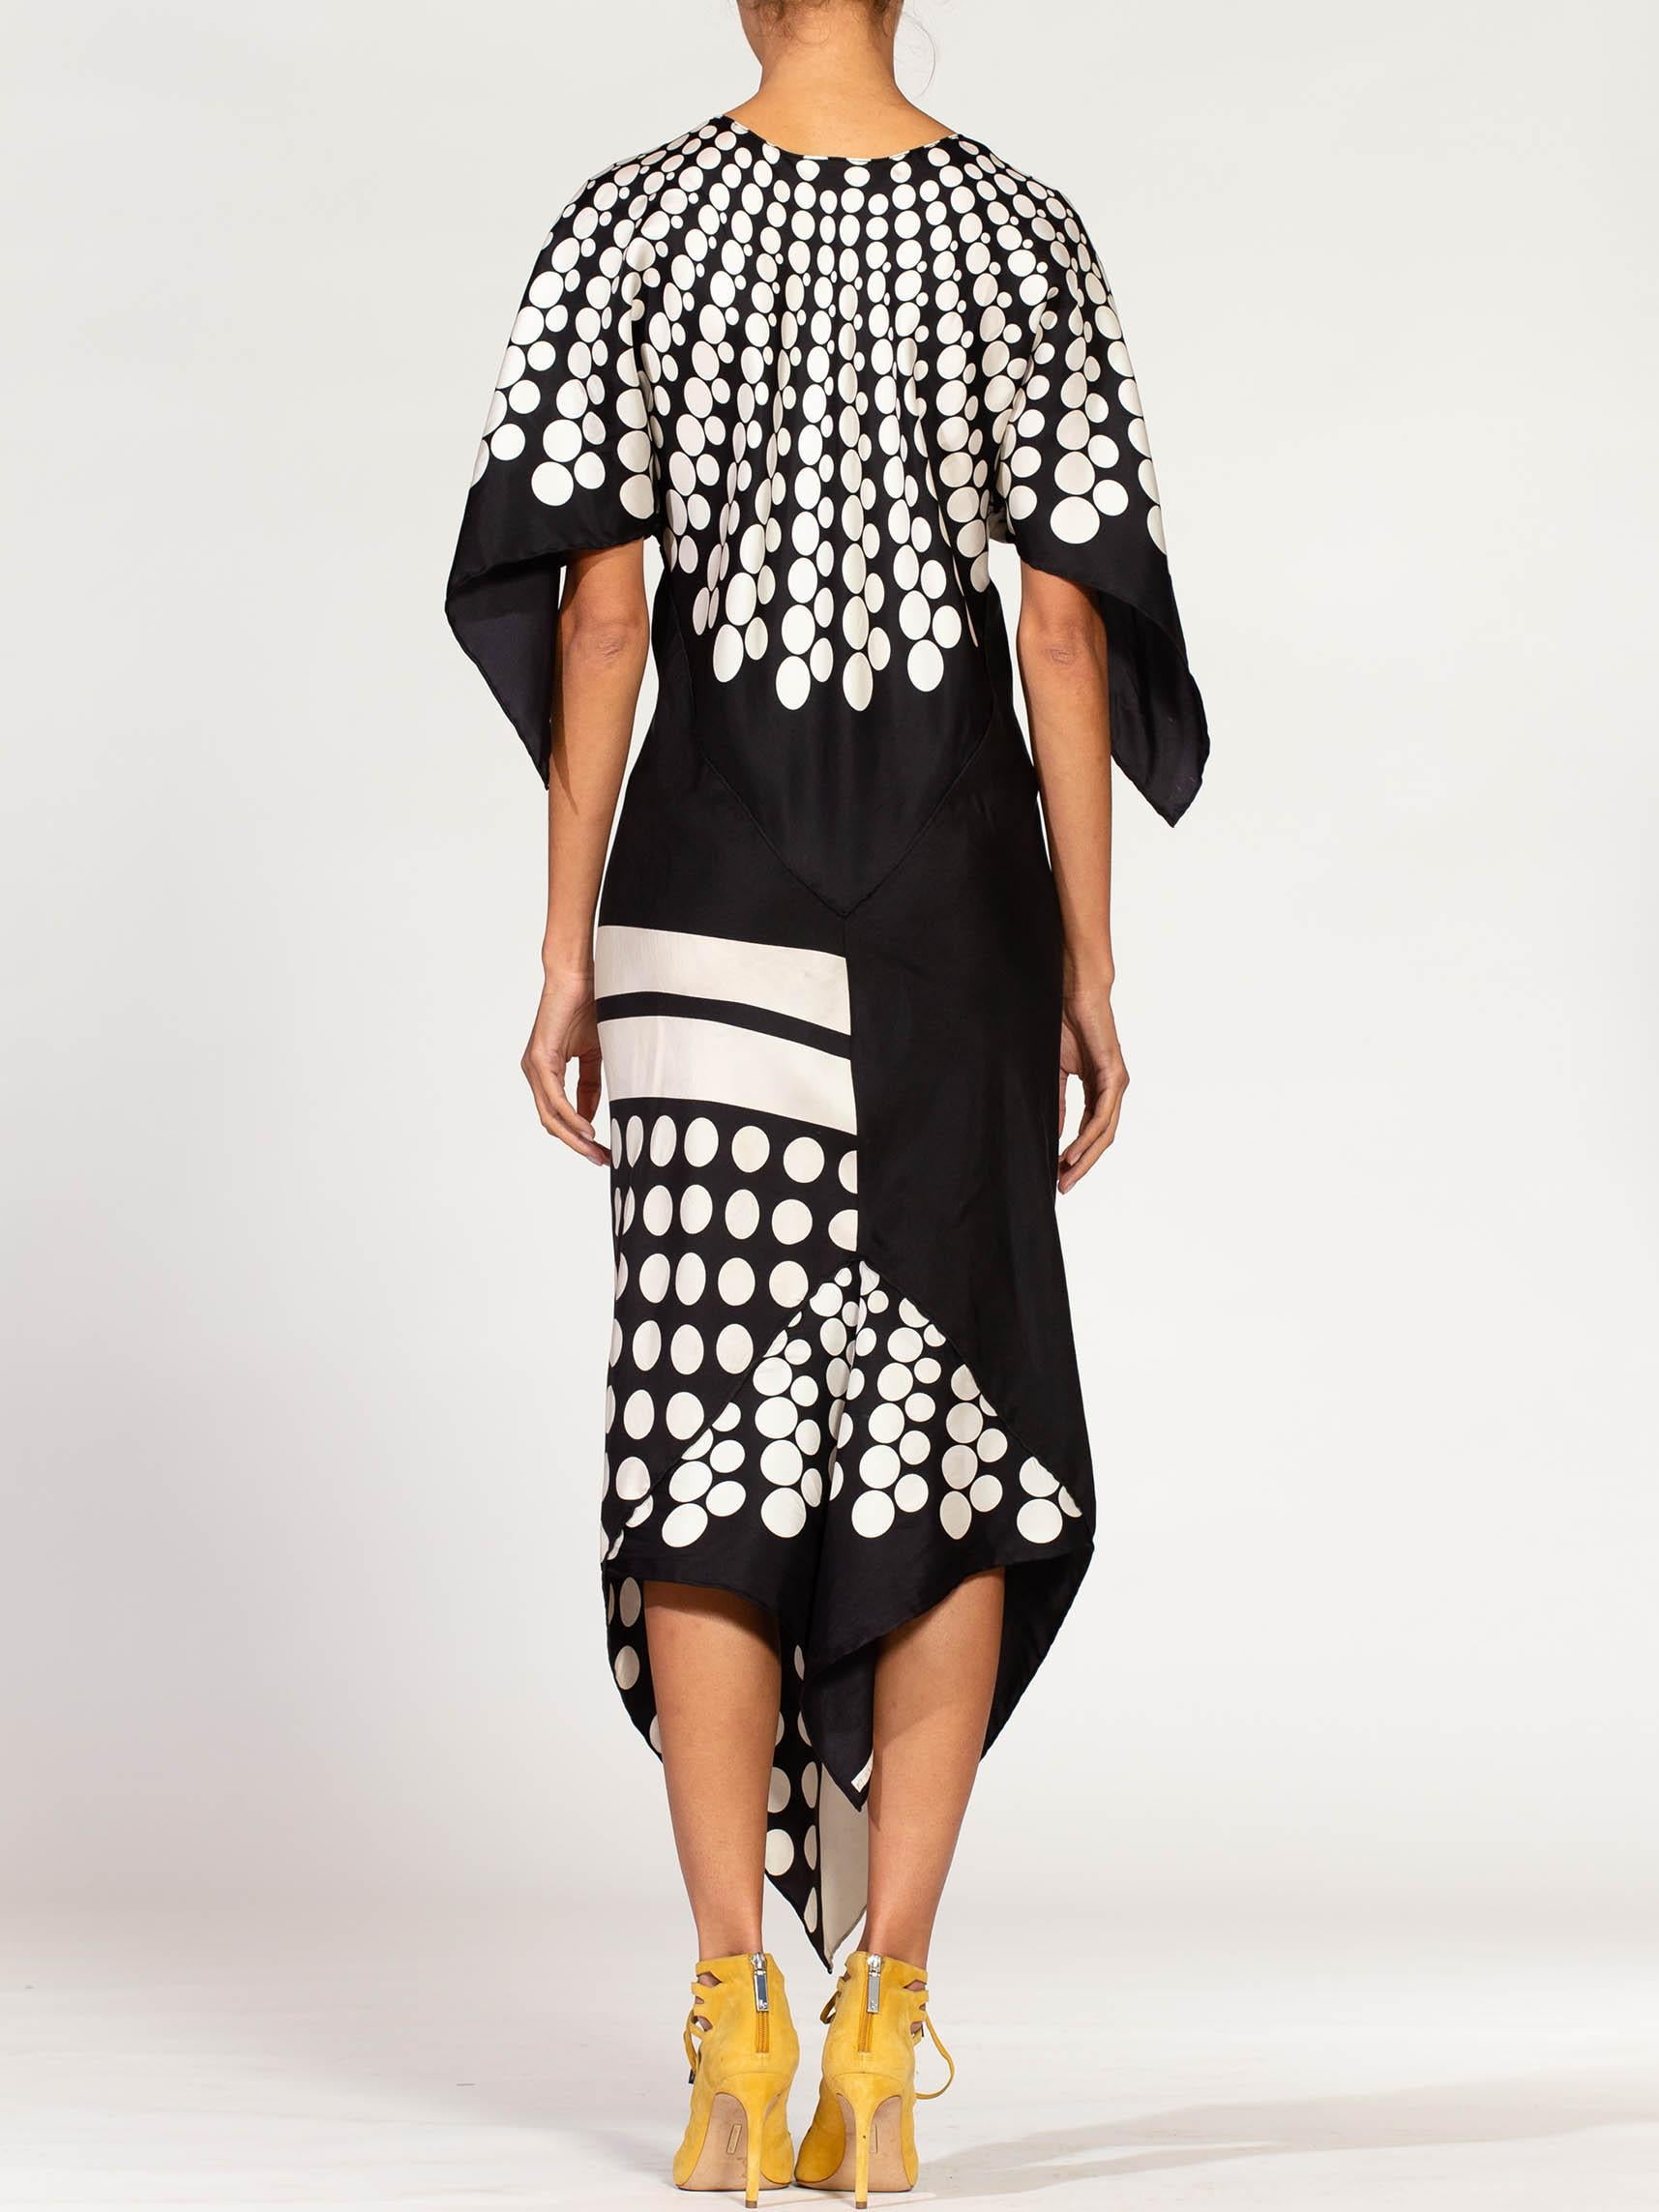 MORPHEW COLLECTION Black & White Bias Cut Silk Twill Two-Scarf Dress 5